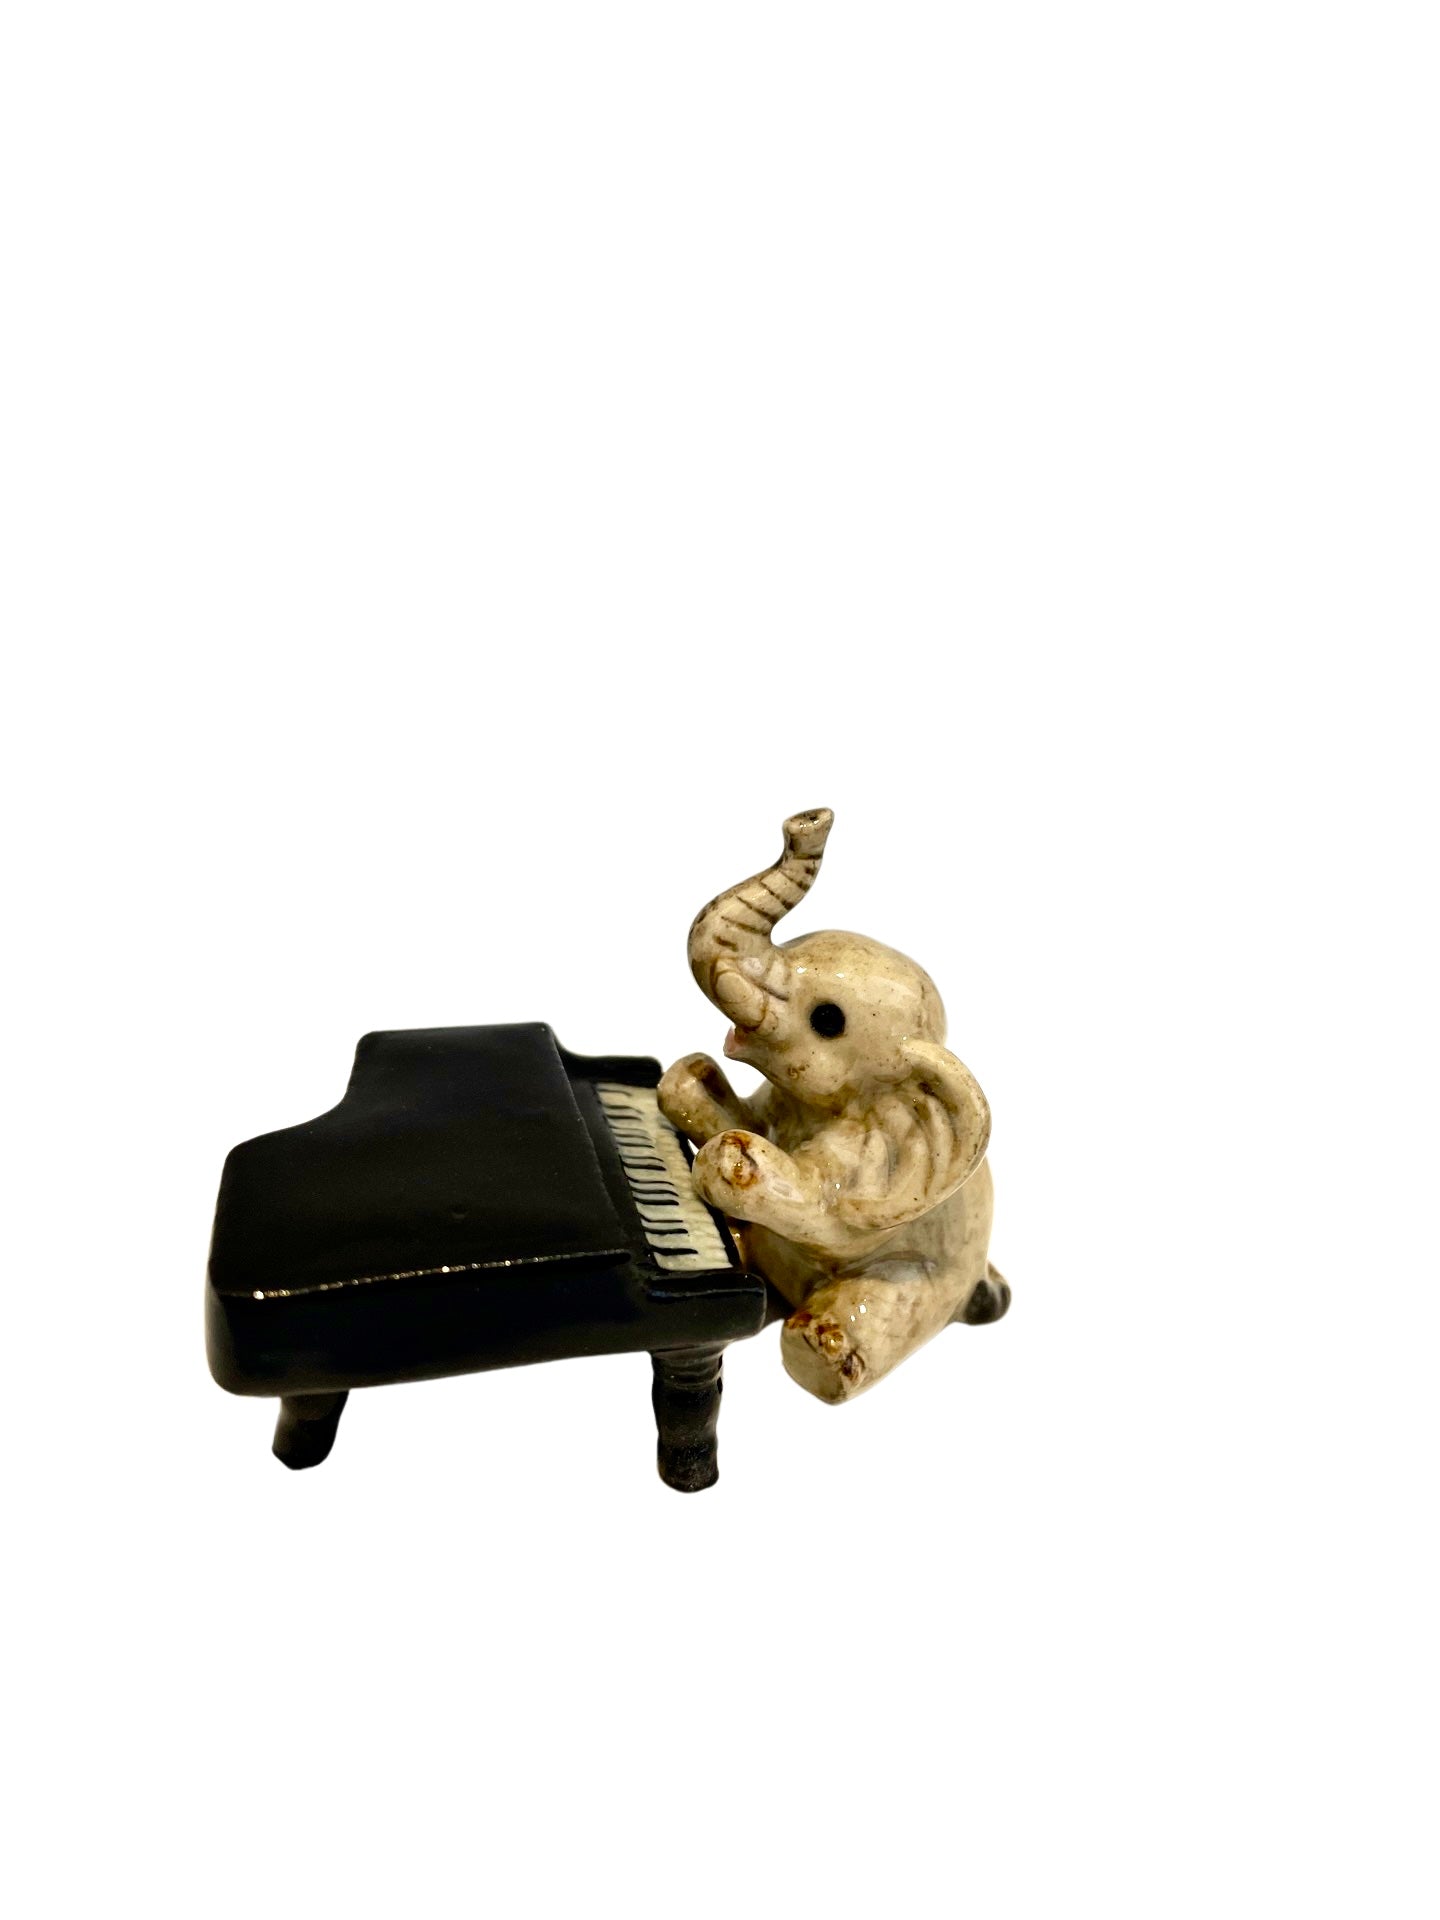 Porcelain Figurine Elephant Playing the Piano